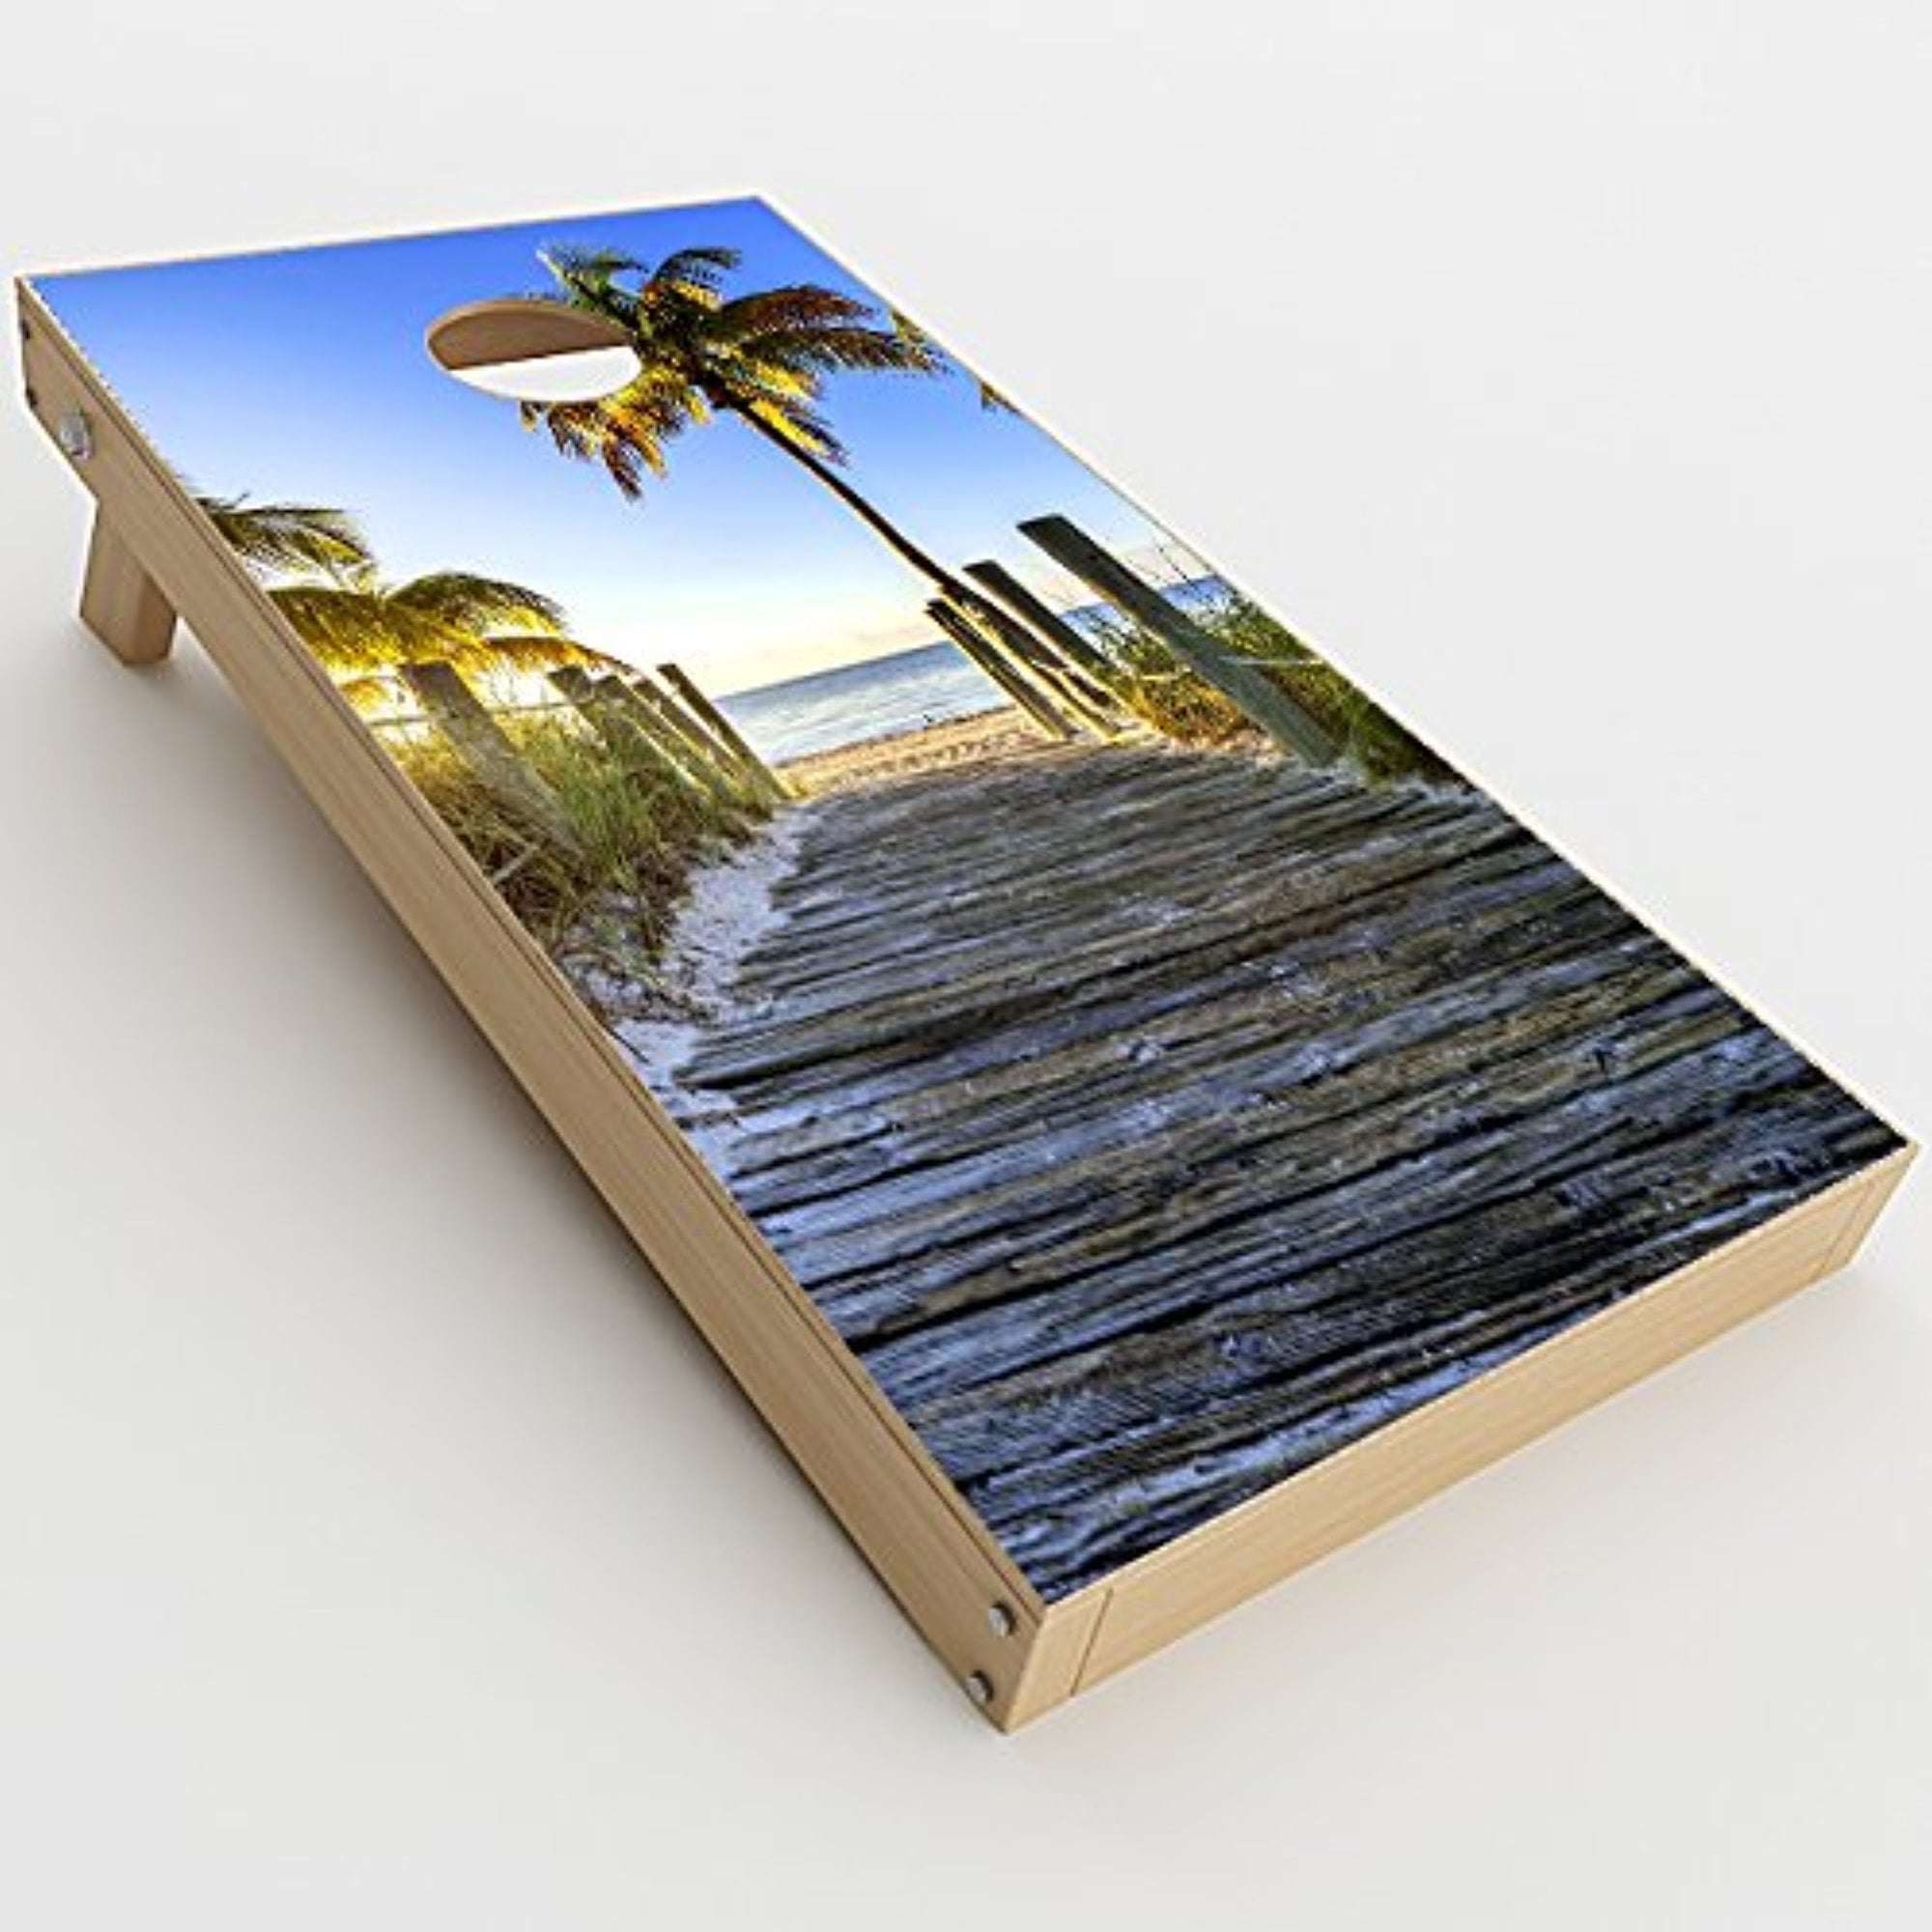 / Wonderland Utopia Rainbow itsaskin1 Skin Decal Vinyl Wrap for Cornhole Game Board Bag Toss 2xpcs. 